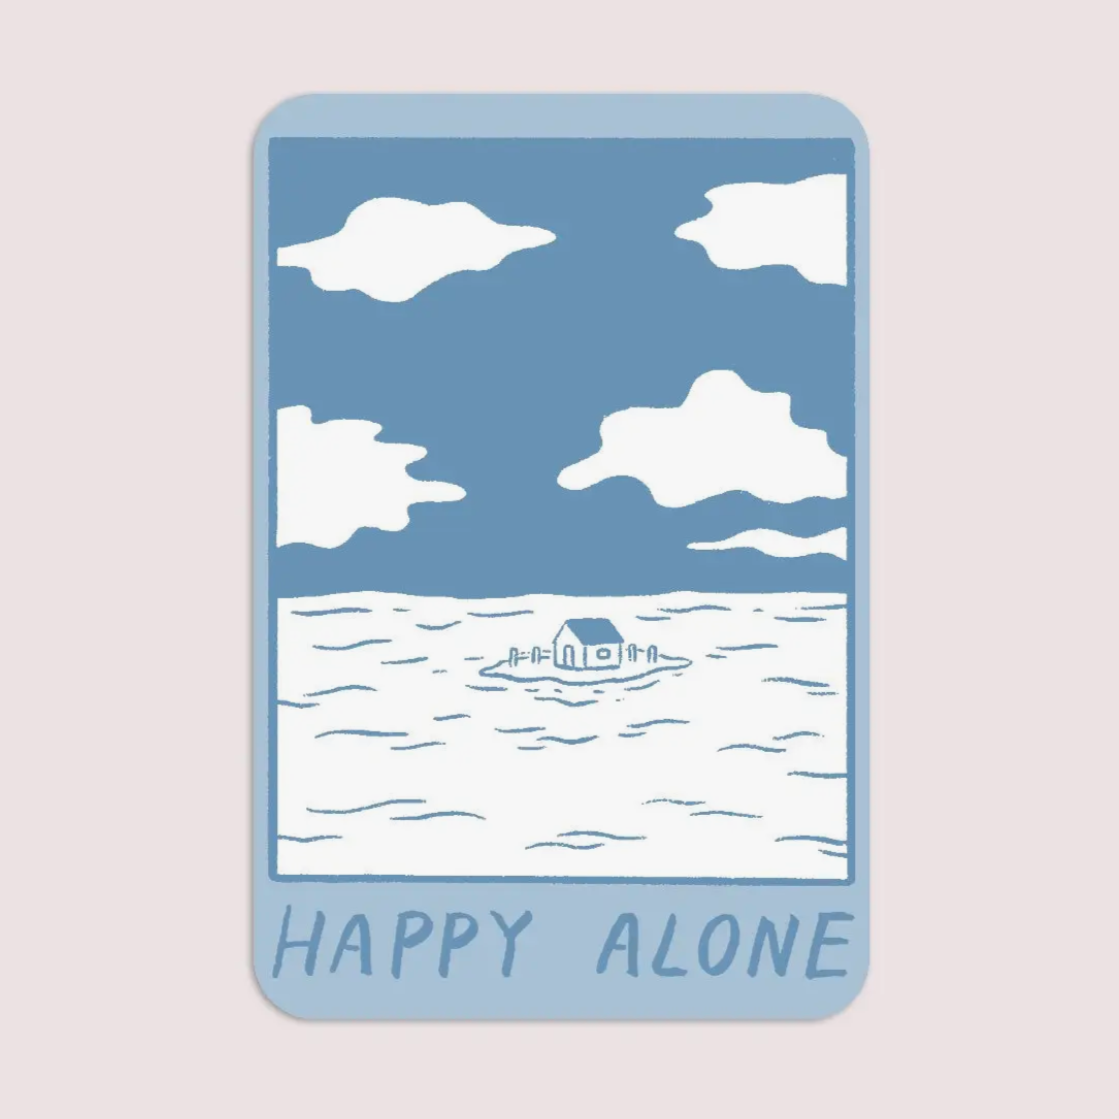 Happy Alone (Blue Skies) Vinyl Sticker